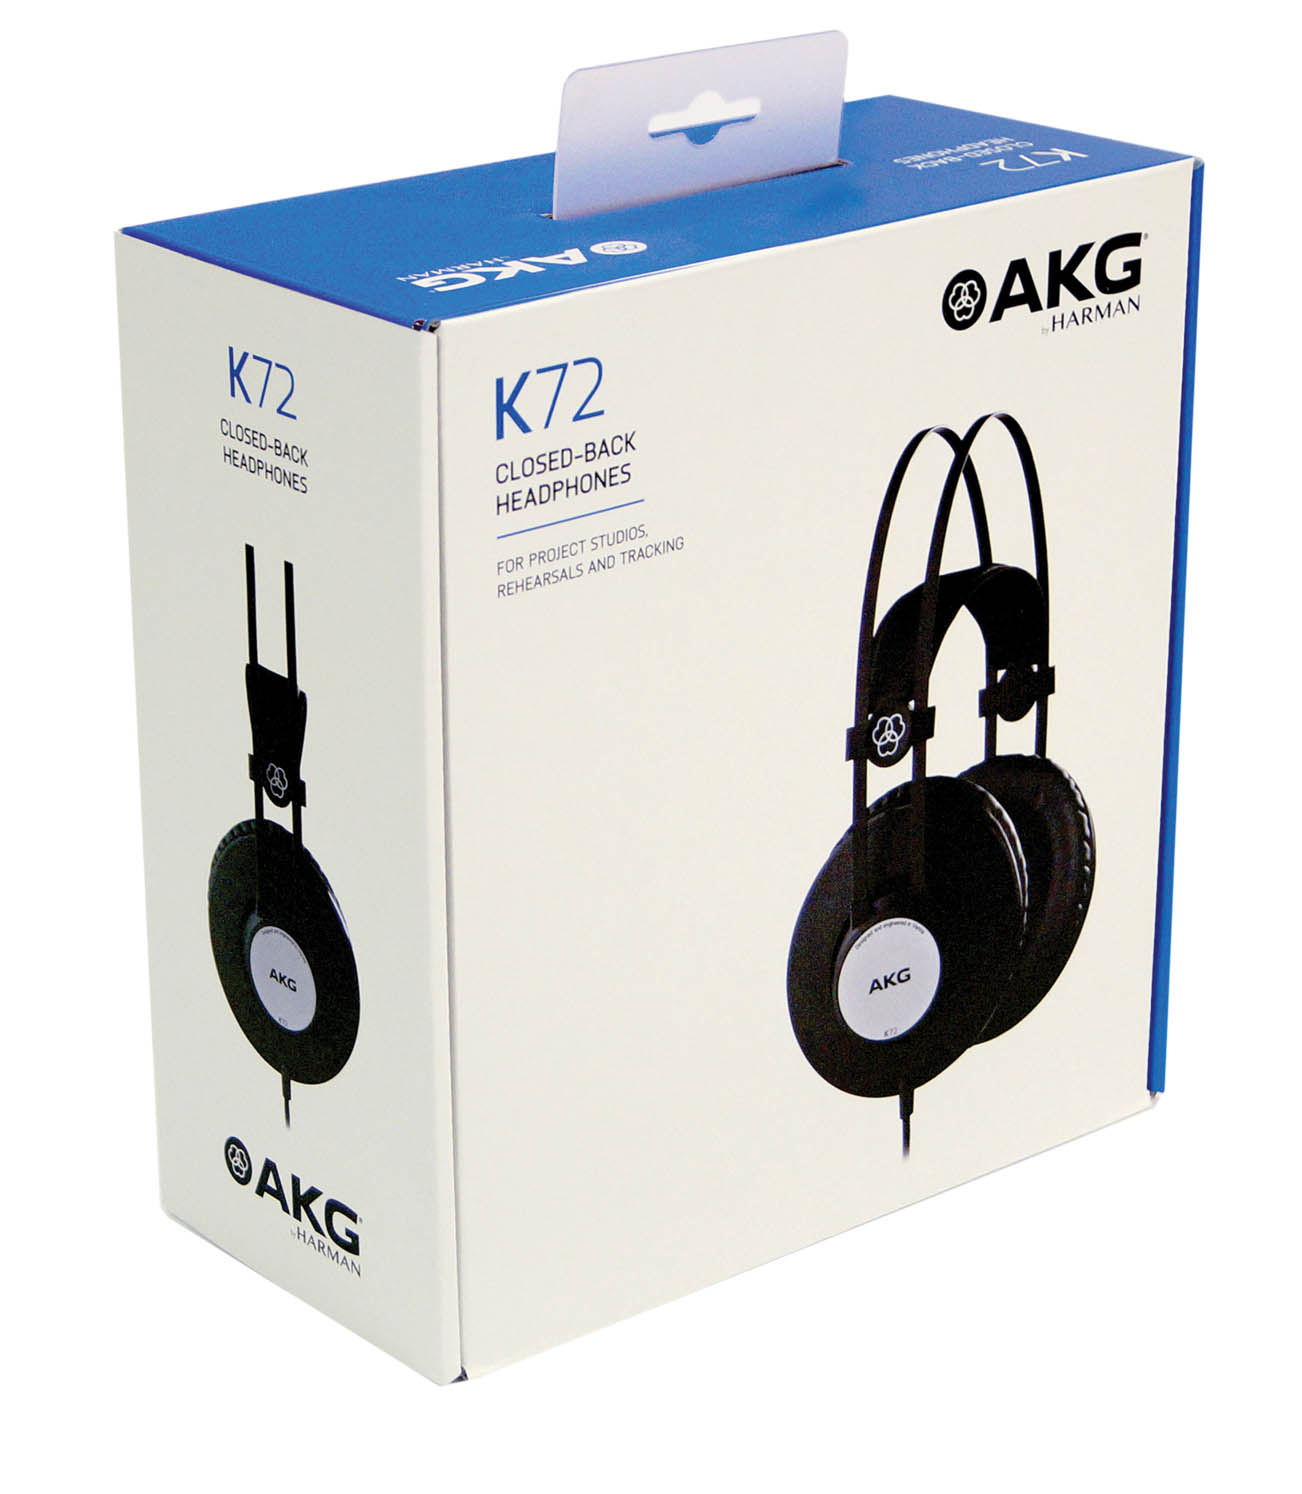 akg k72 headset